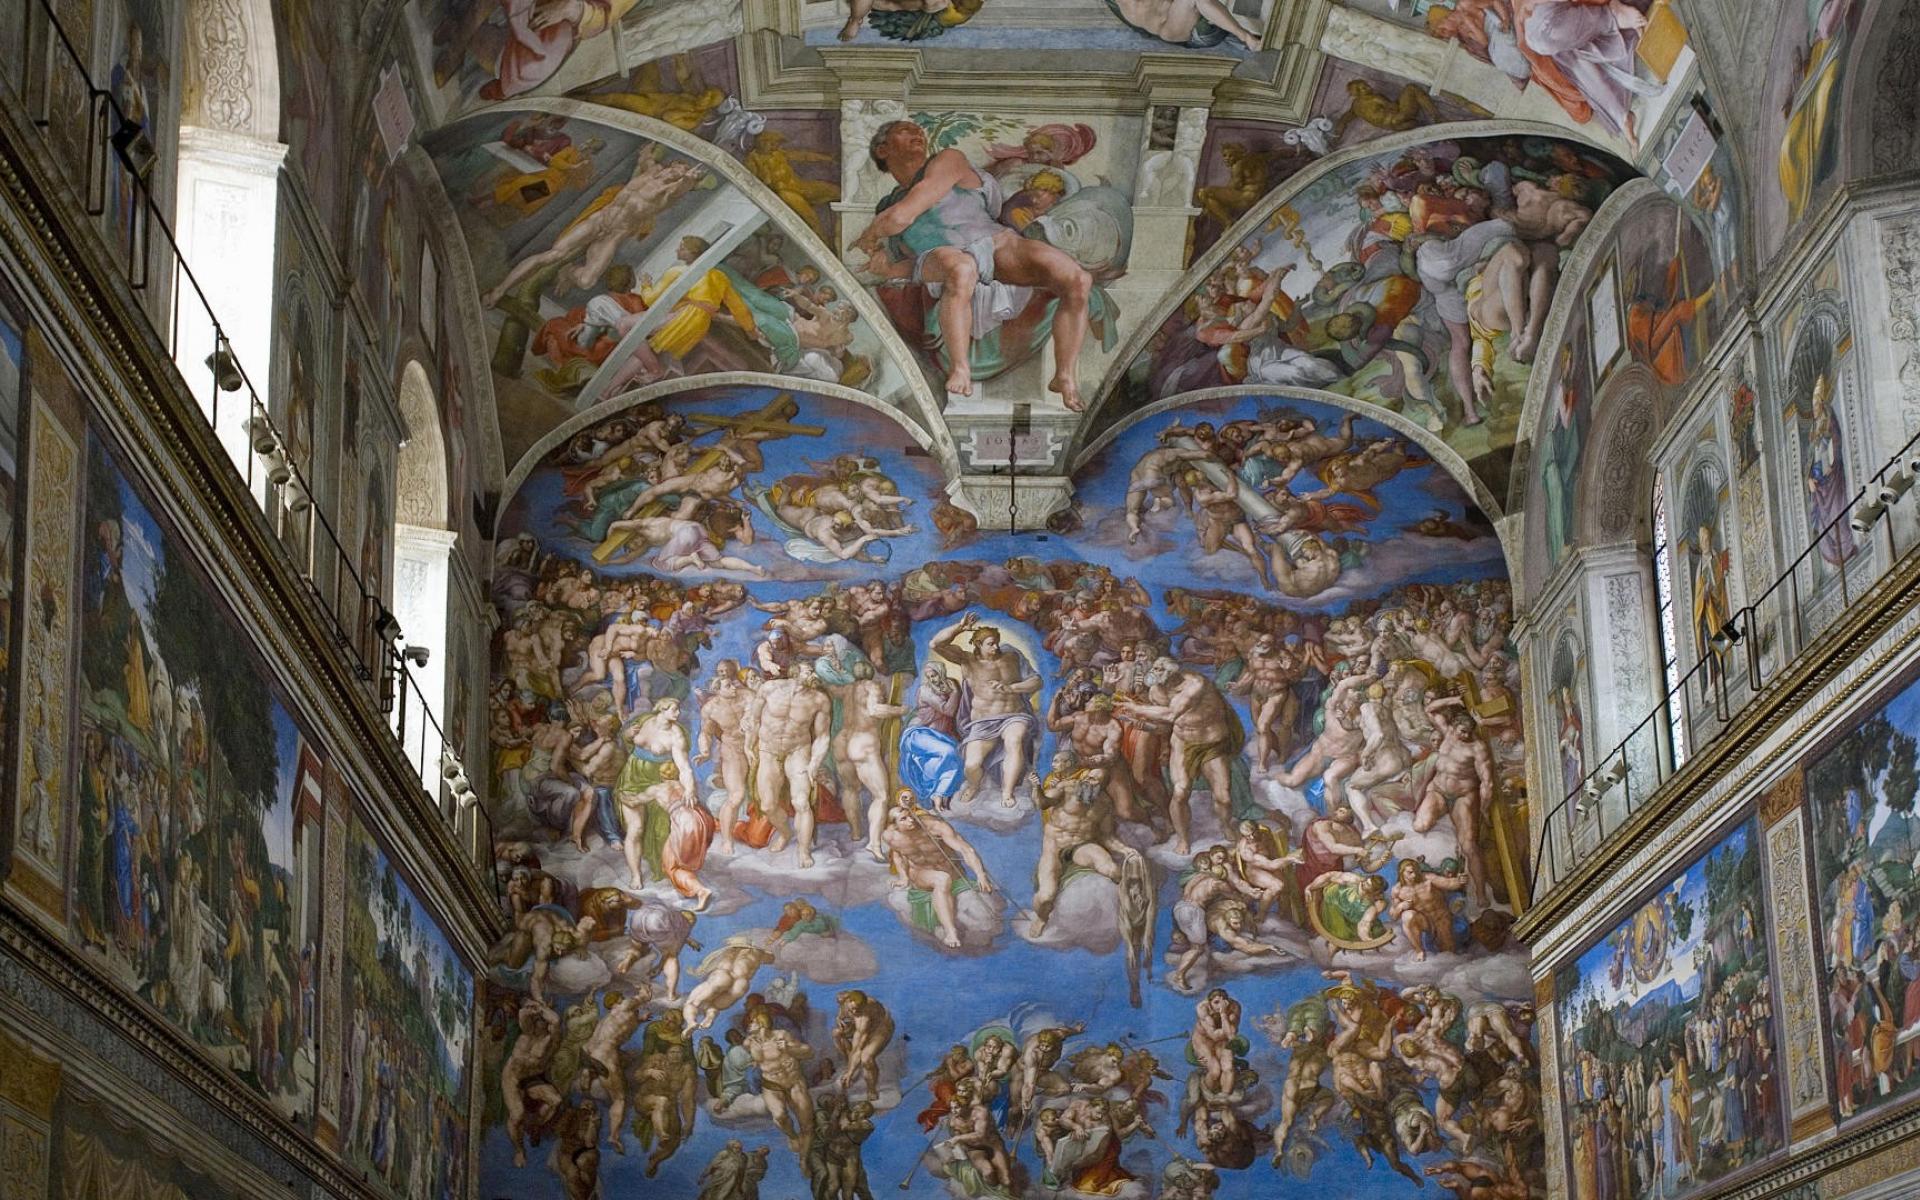 Sistine Chapel 1850180 Hd Wallpaper Backgrounds Download